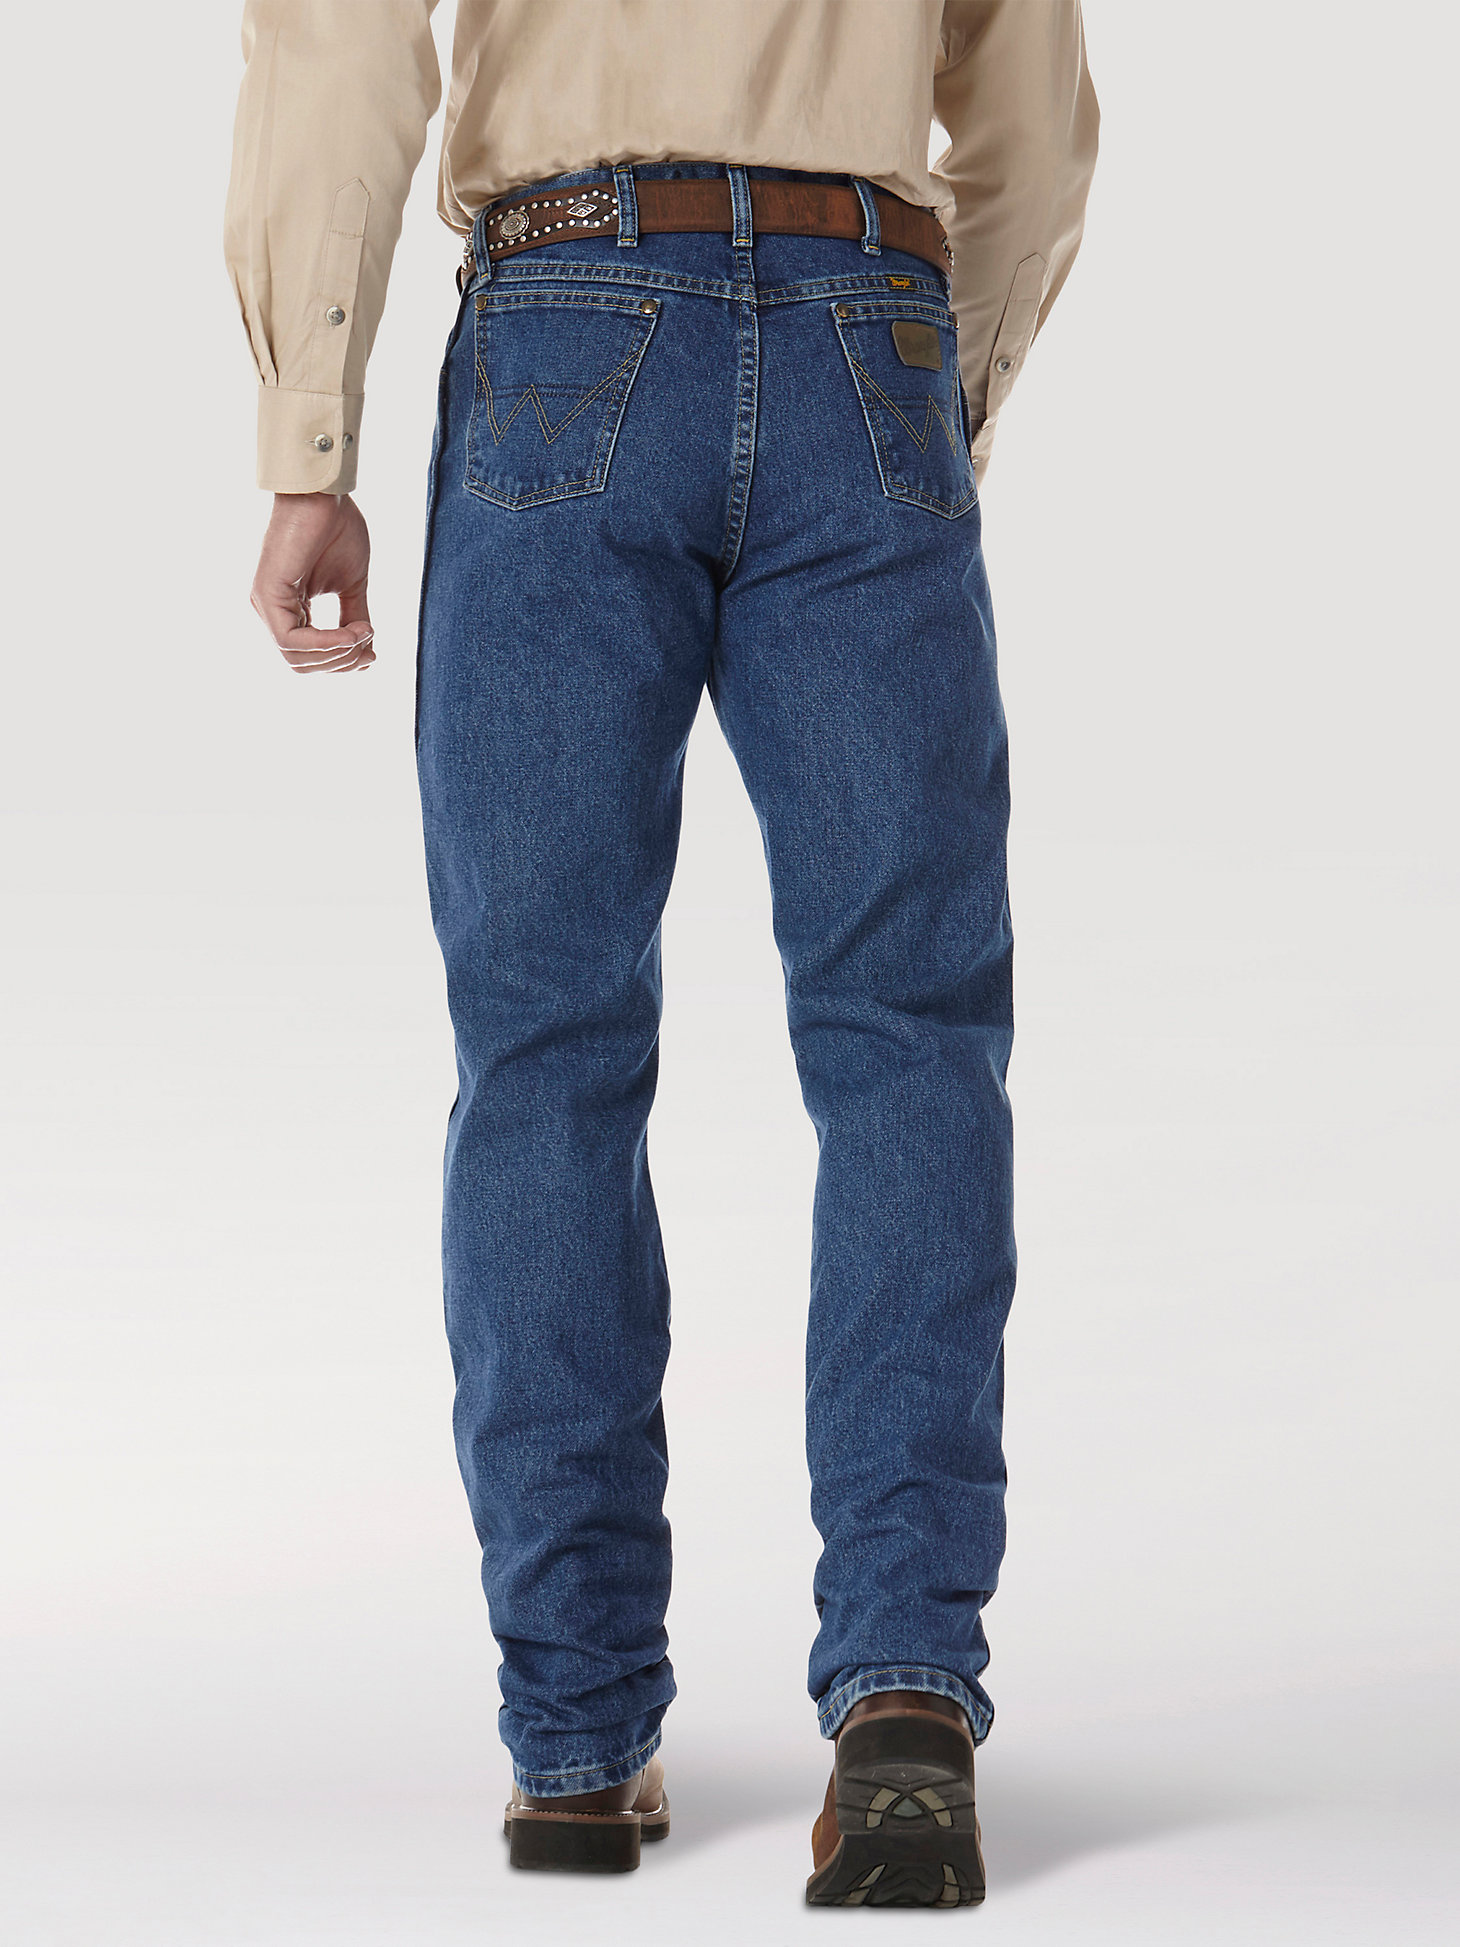 George Strait Cowboy Cut® Original Fit Jean in Heavyweight Stone Denim alternative view 5